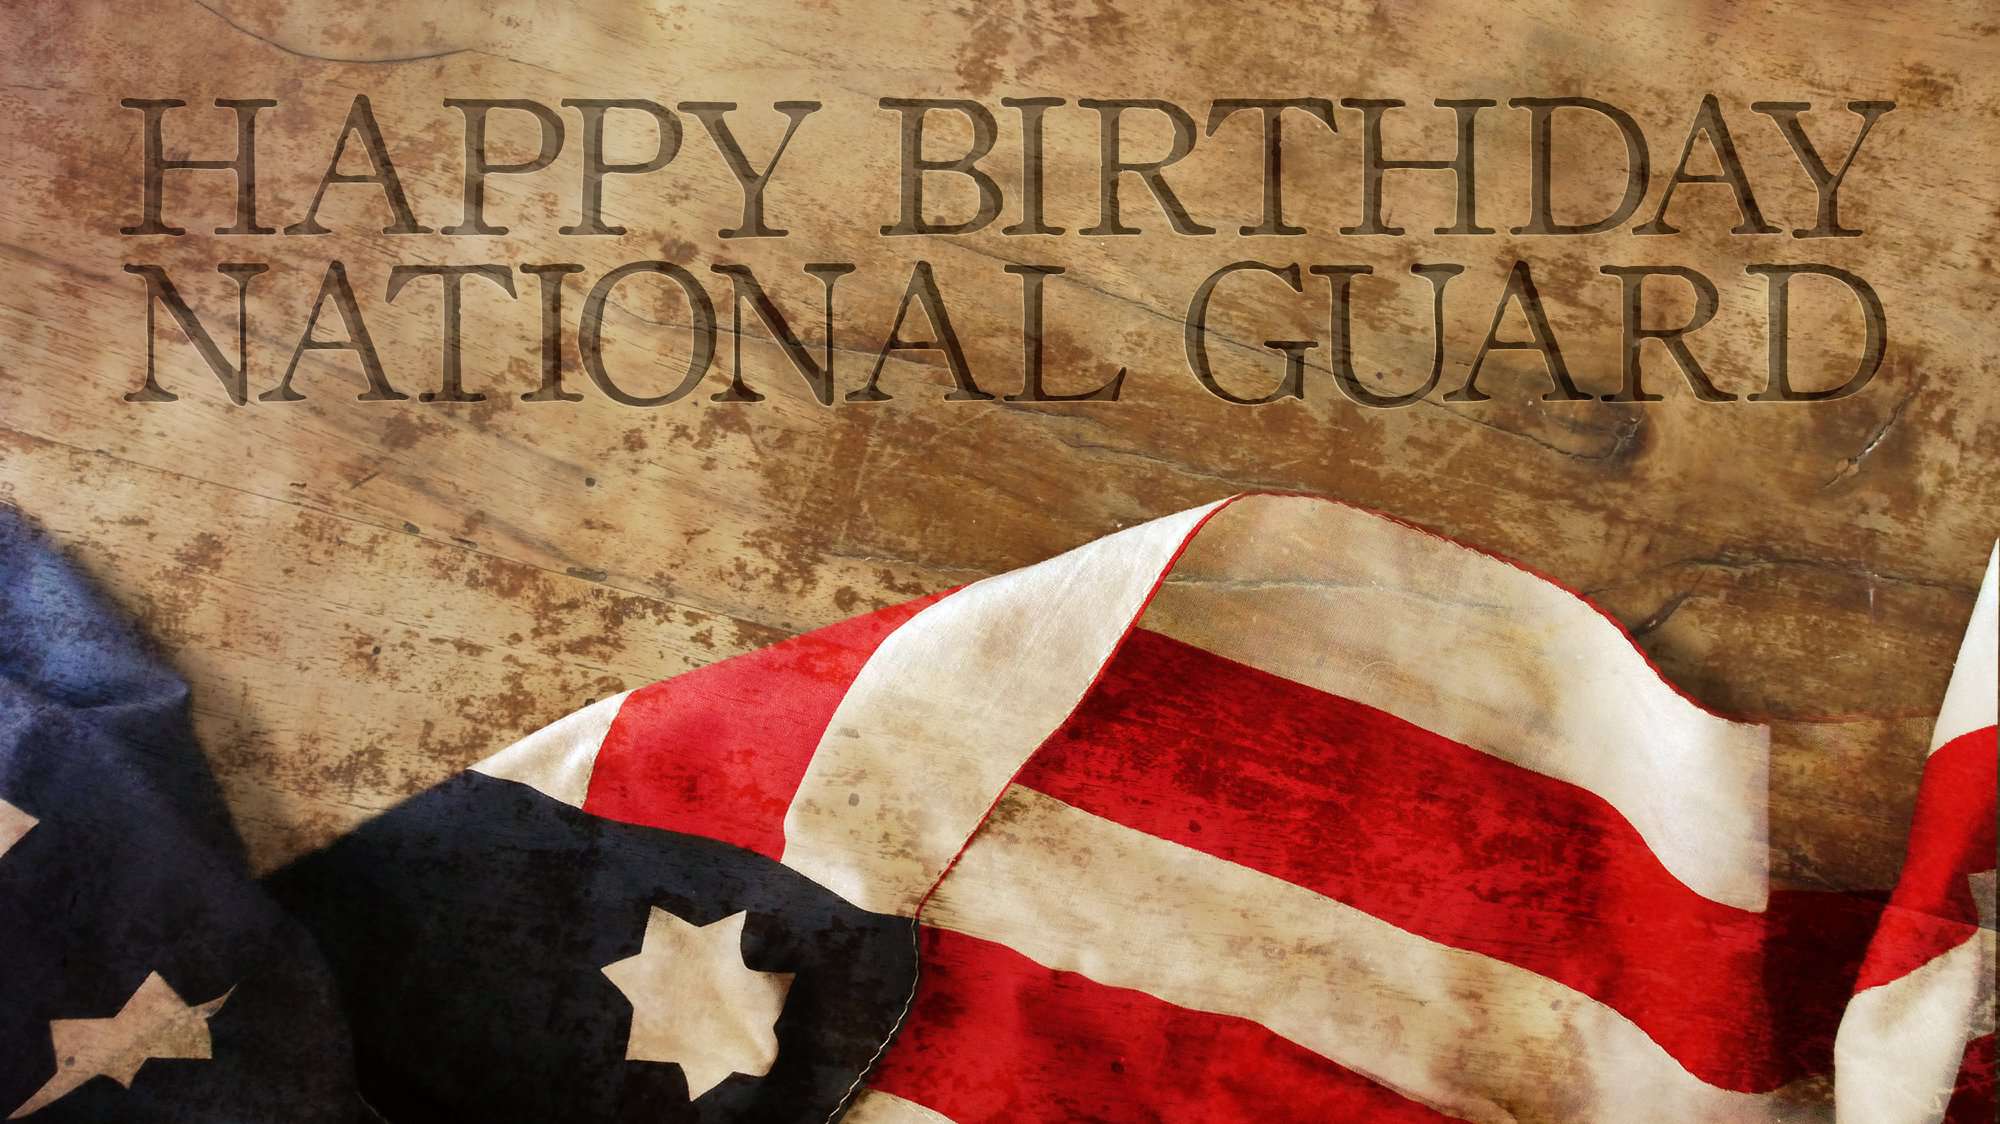 U.S. National Guard Birthday Wishes for Whatsapp